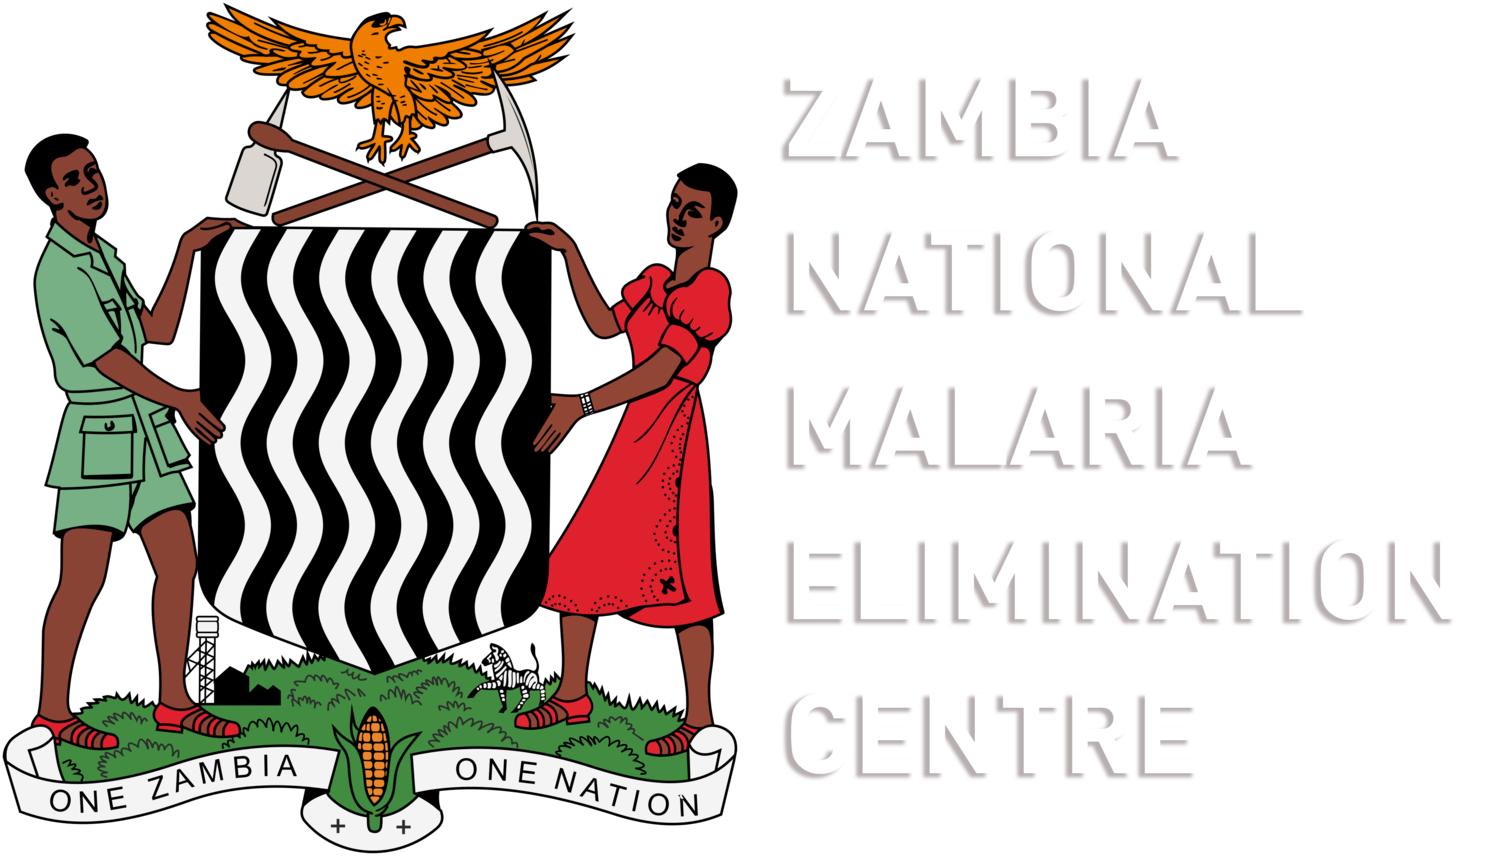 Zambia National Malaria Elimination Centre